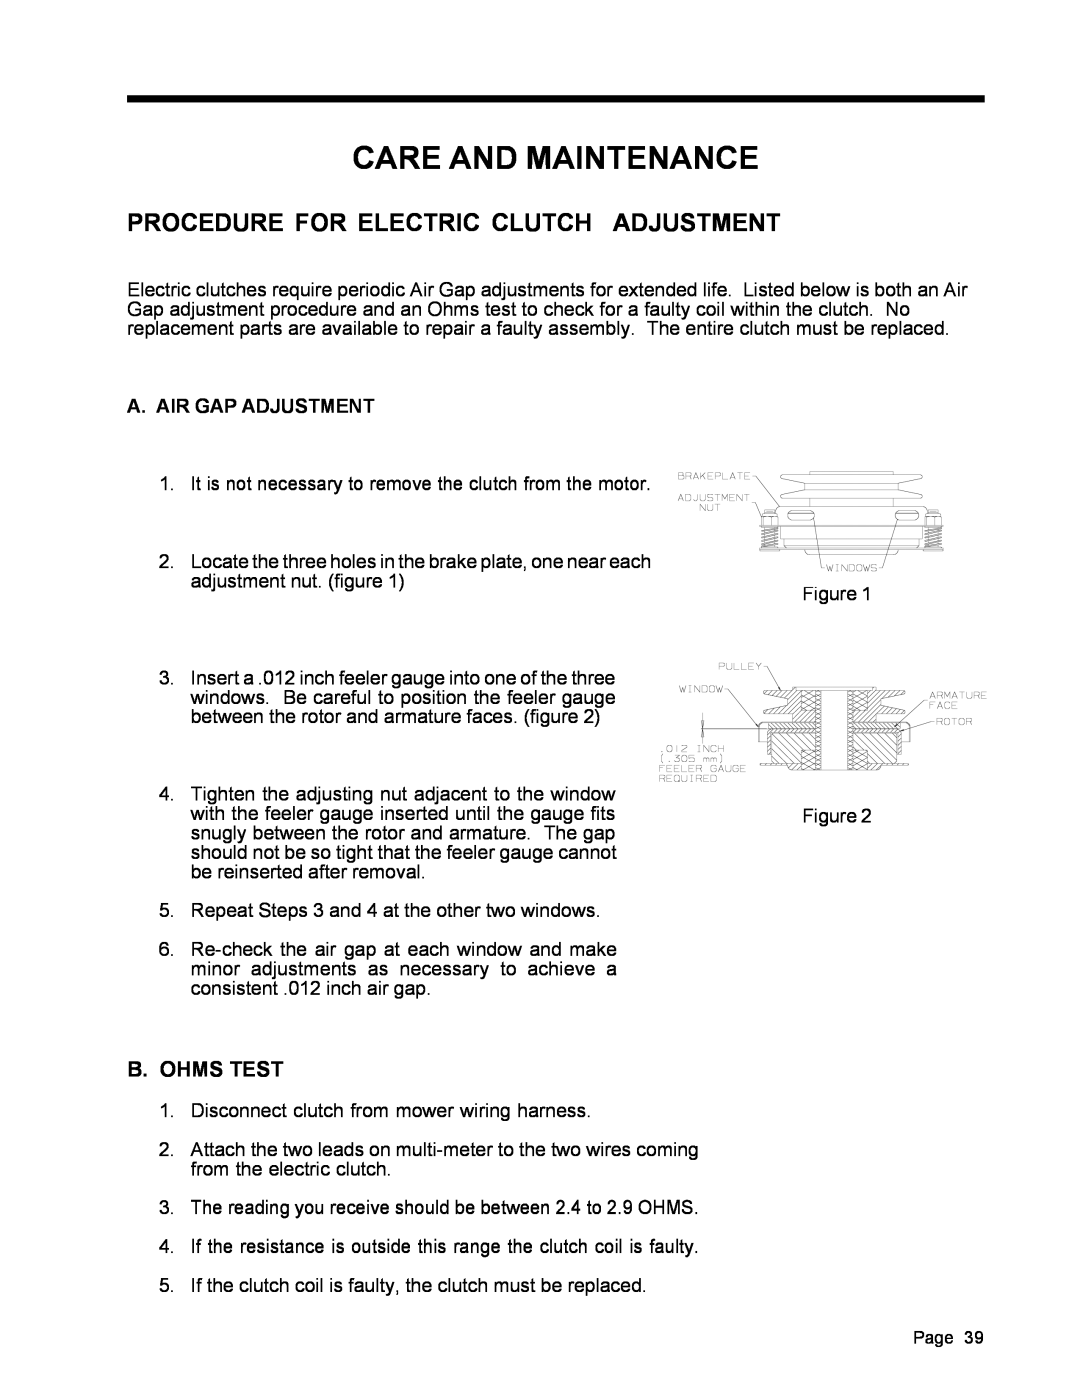 Dixon ZTR 5017 manual Procedure For Electric Clutch Adjustment, Care And Maintenance, B. Ohms Test, A. Air Gap Adjustment 